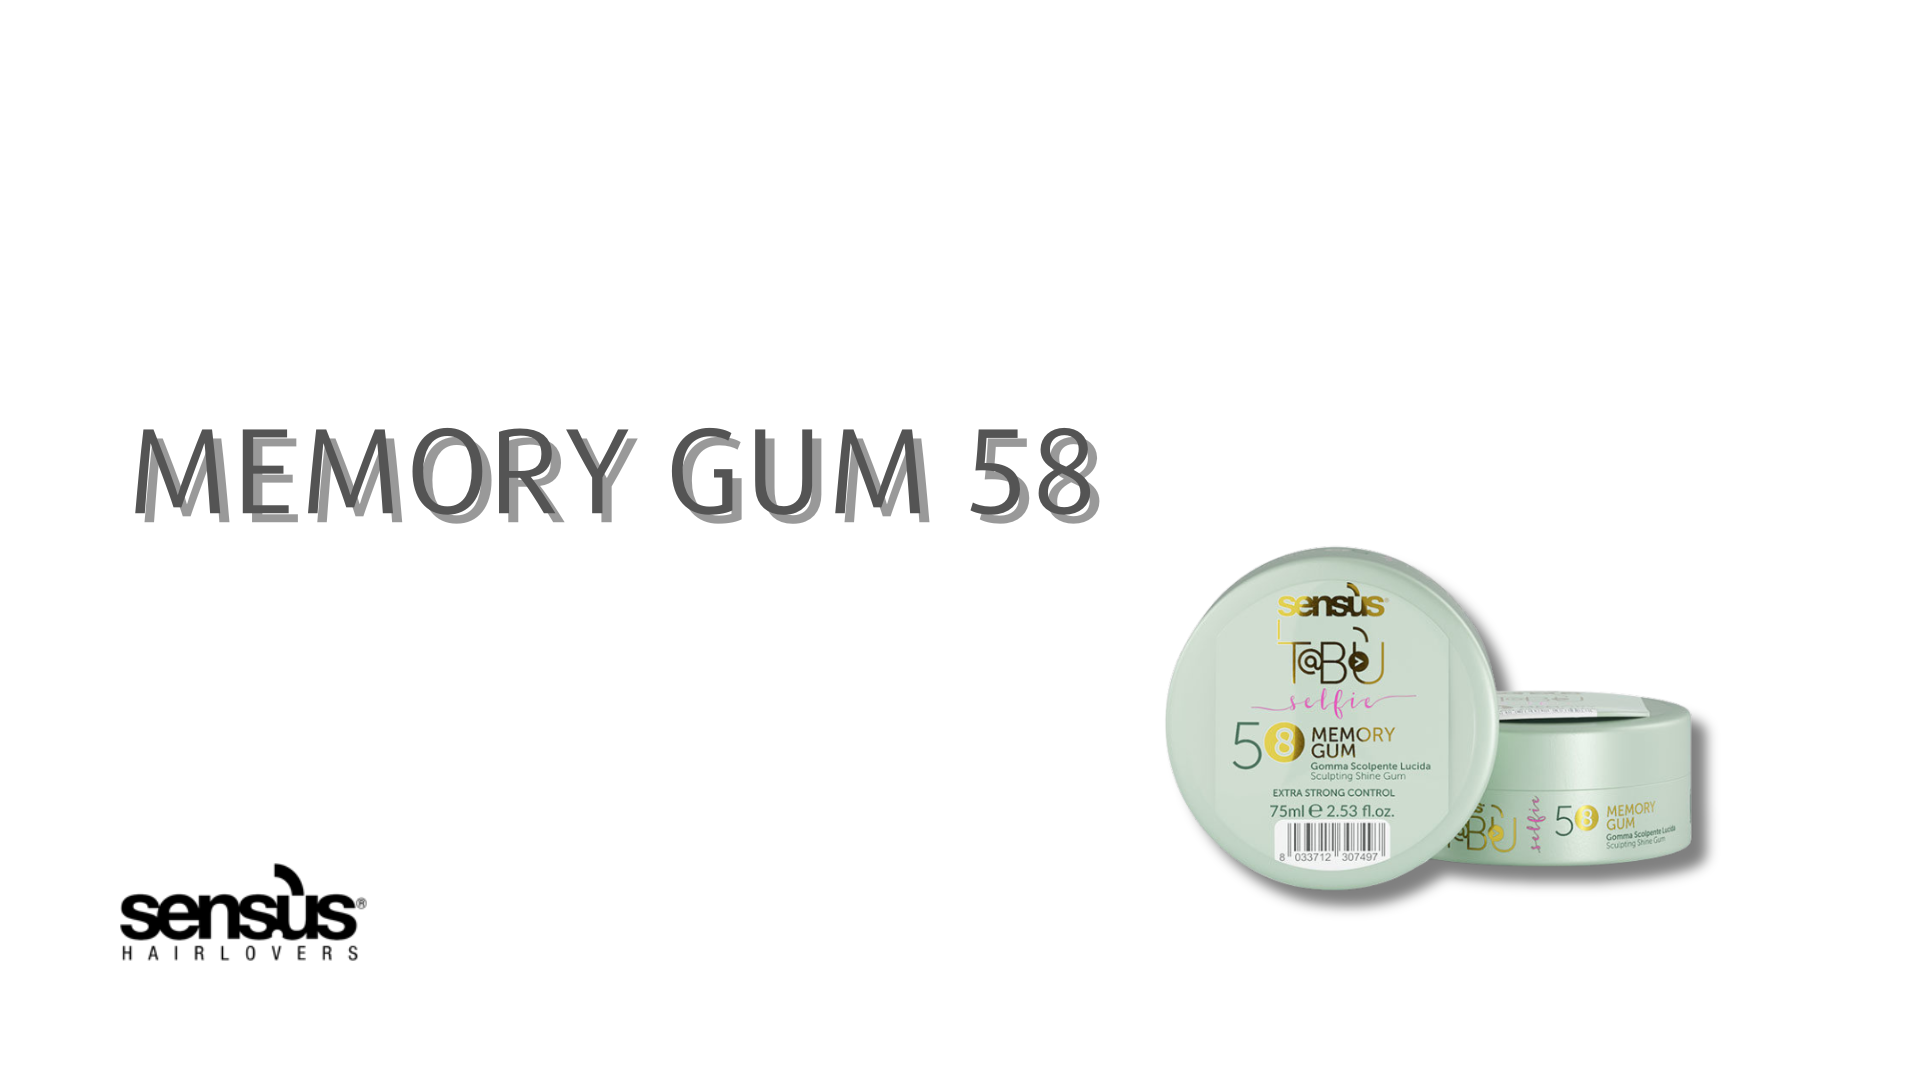 Memory gum 58 - Styling